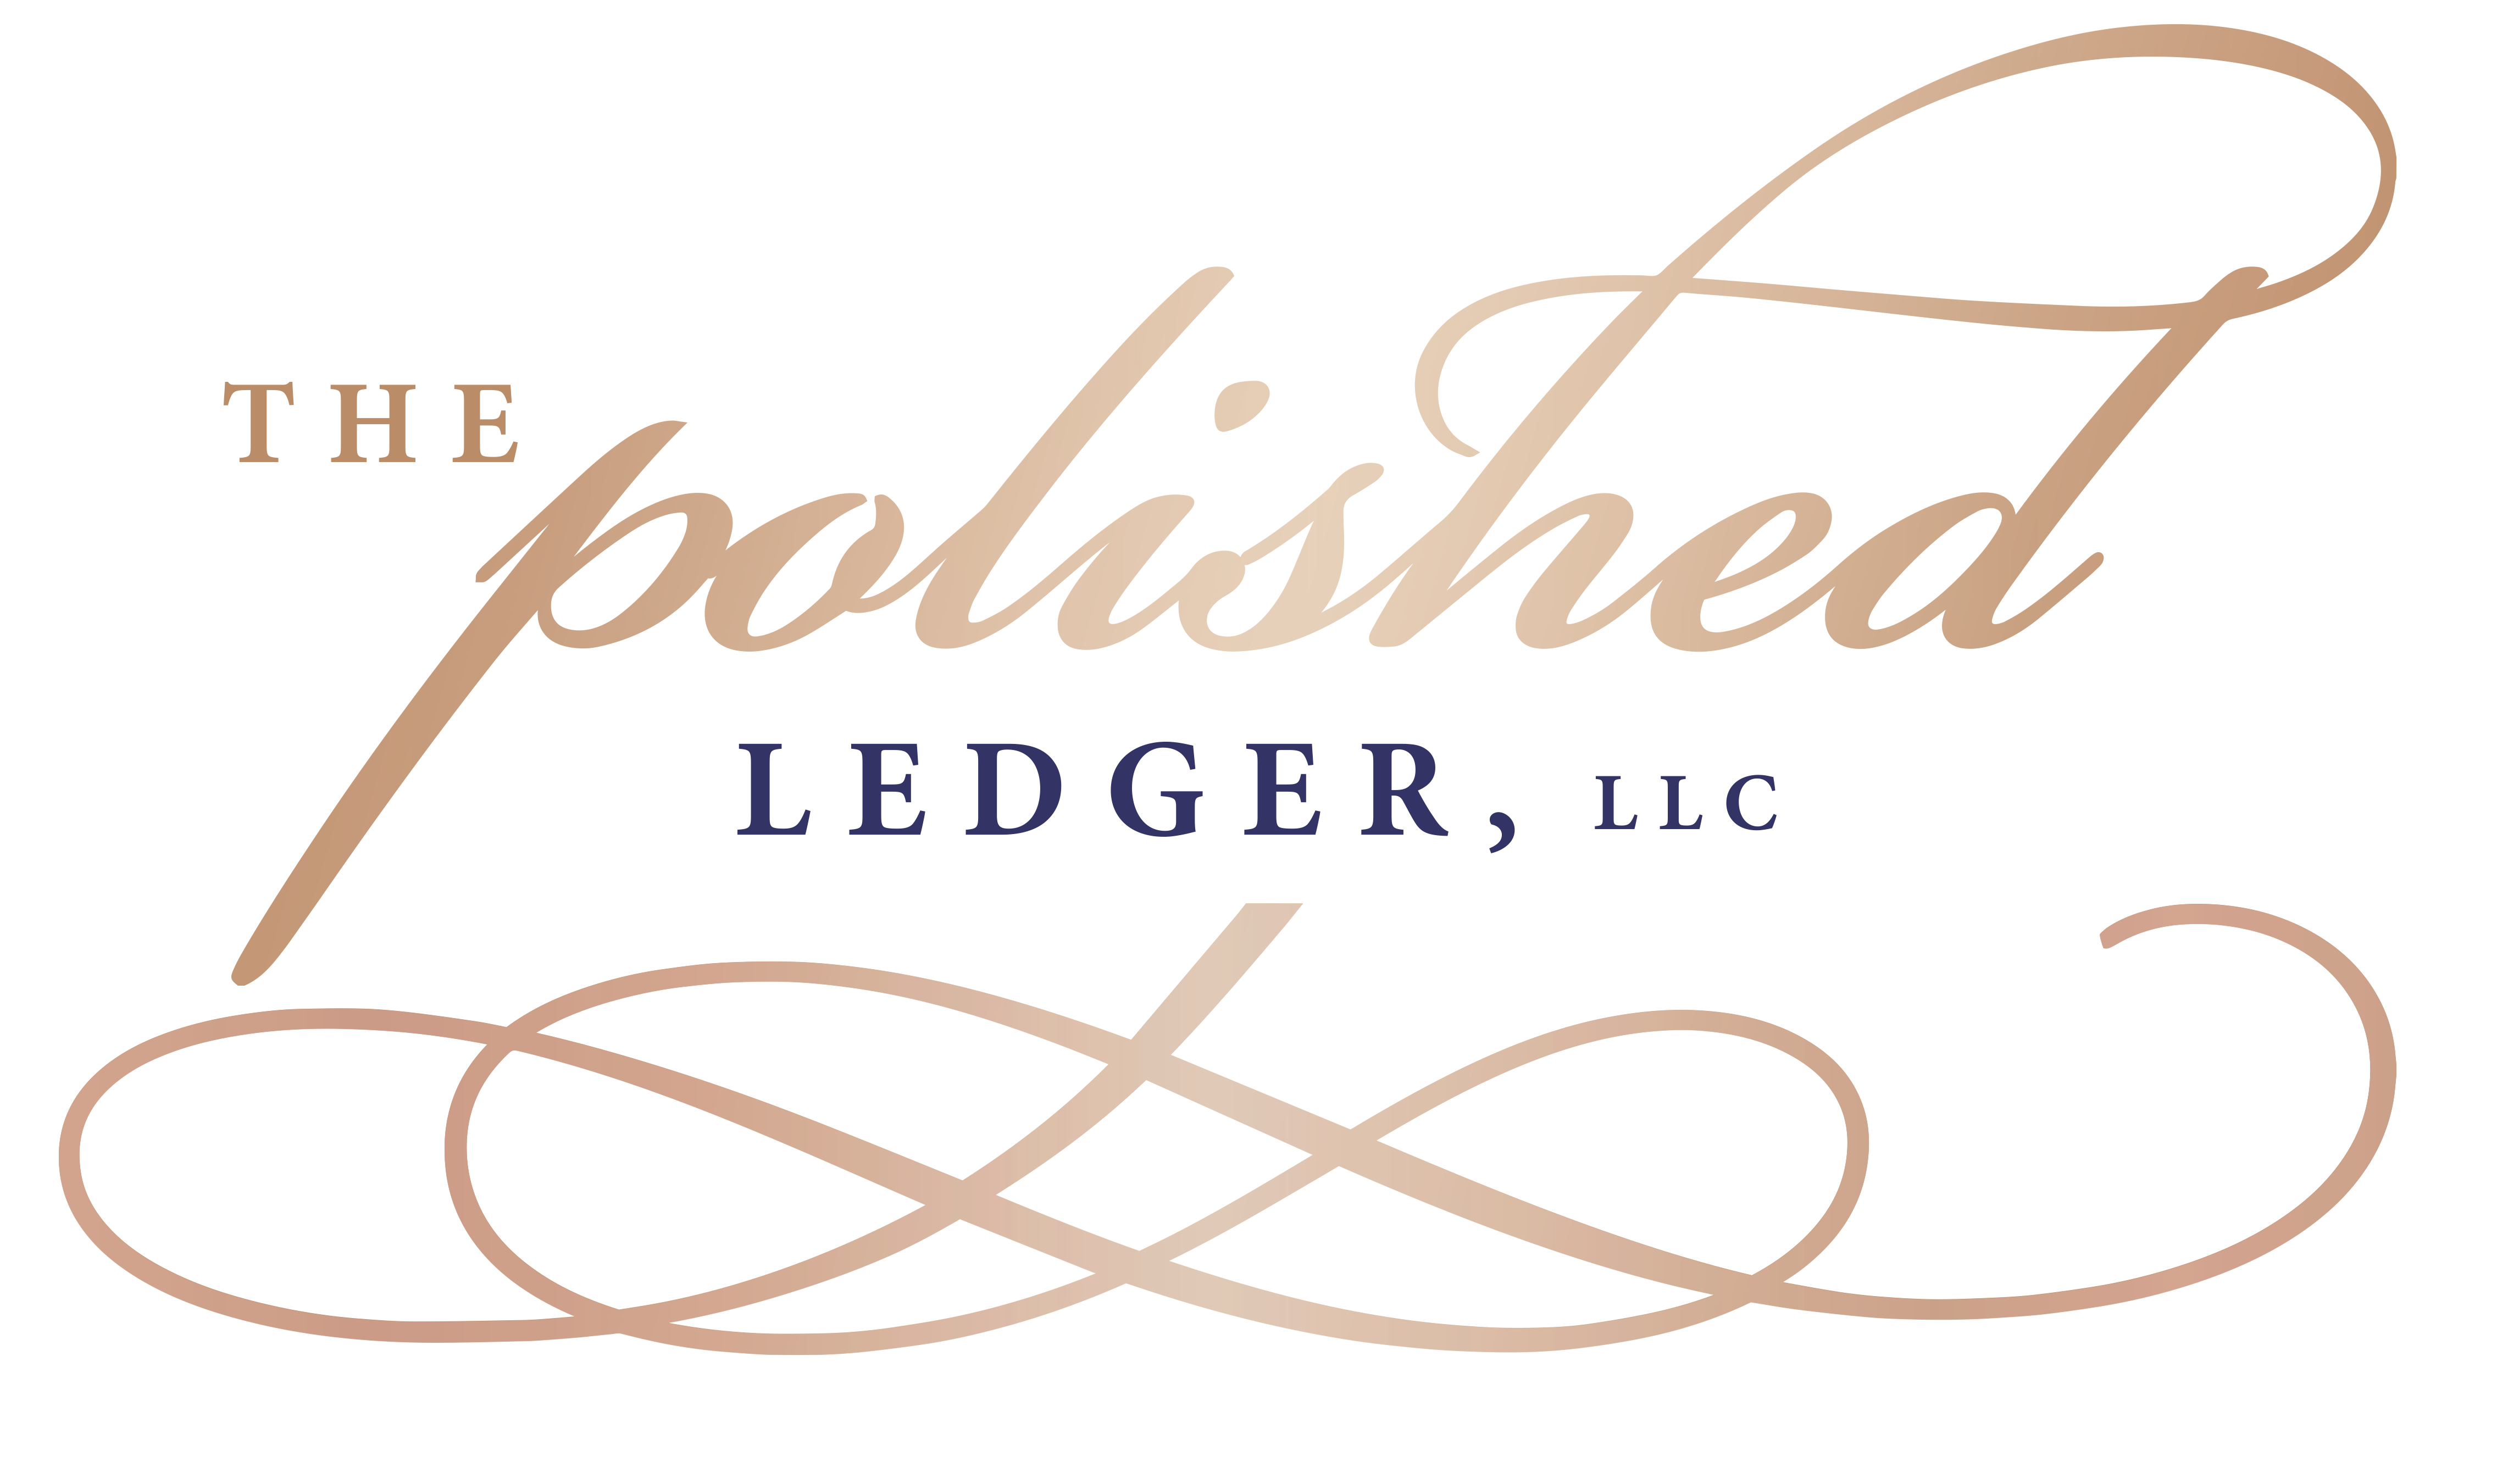 The Polished Ledger, LLC